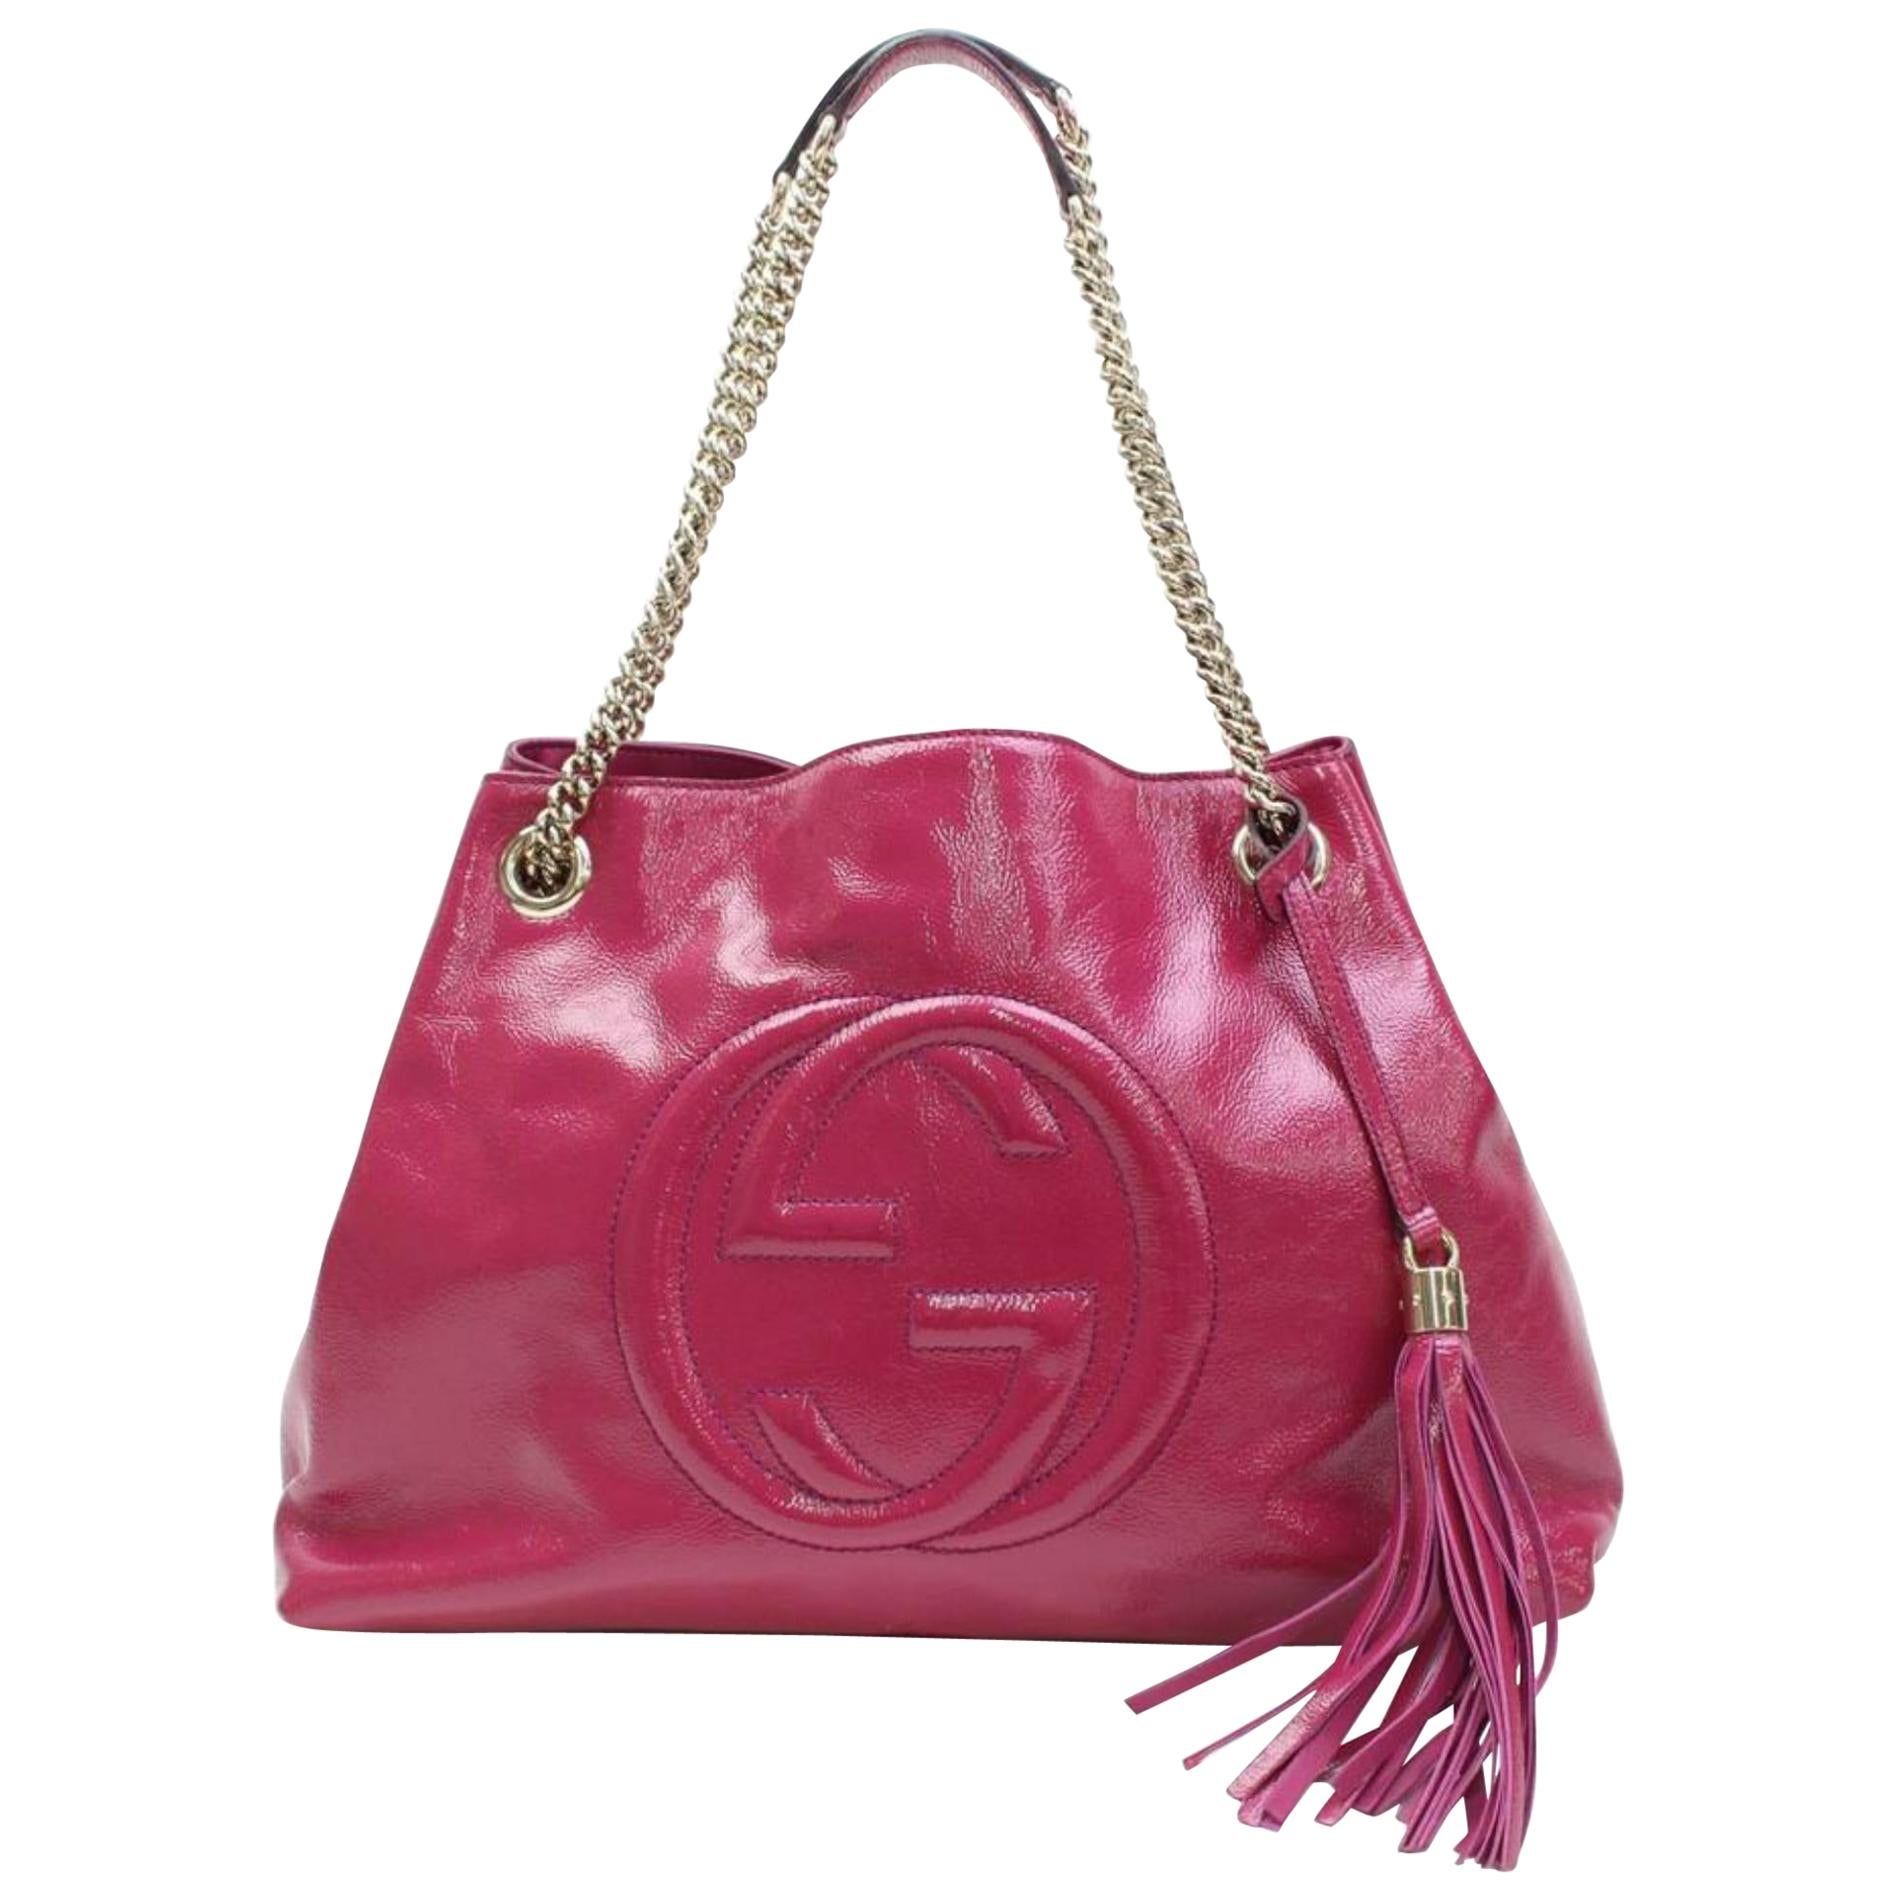 Gucci Soho Chain Tote 867472 Fuchsia Patent Leather Shoulder Bag For Sale